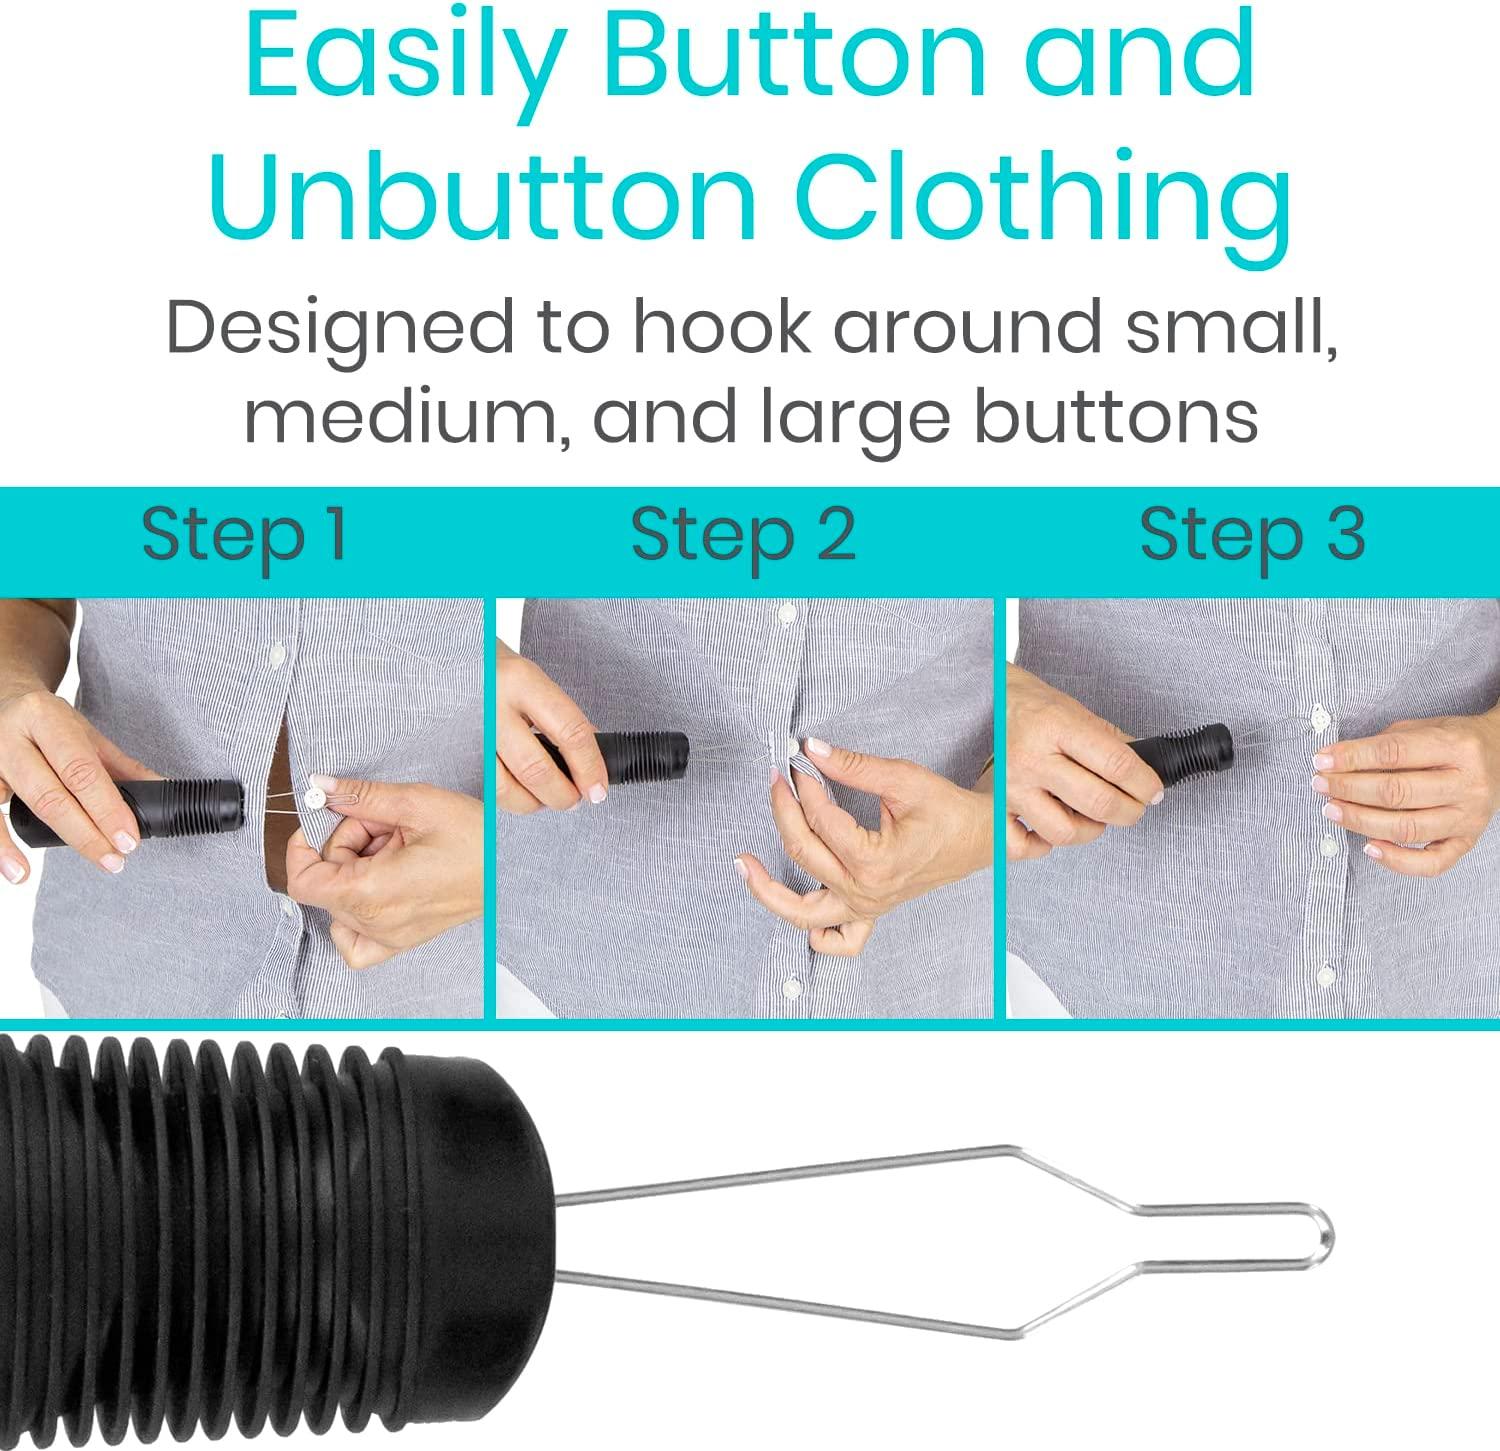 Button Hook/Zipper Pull from Essential Aids